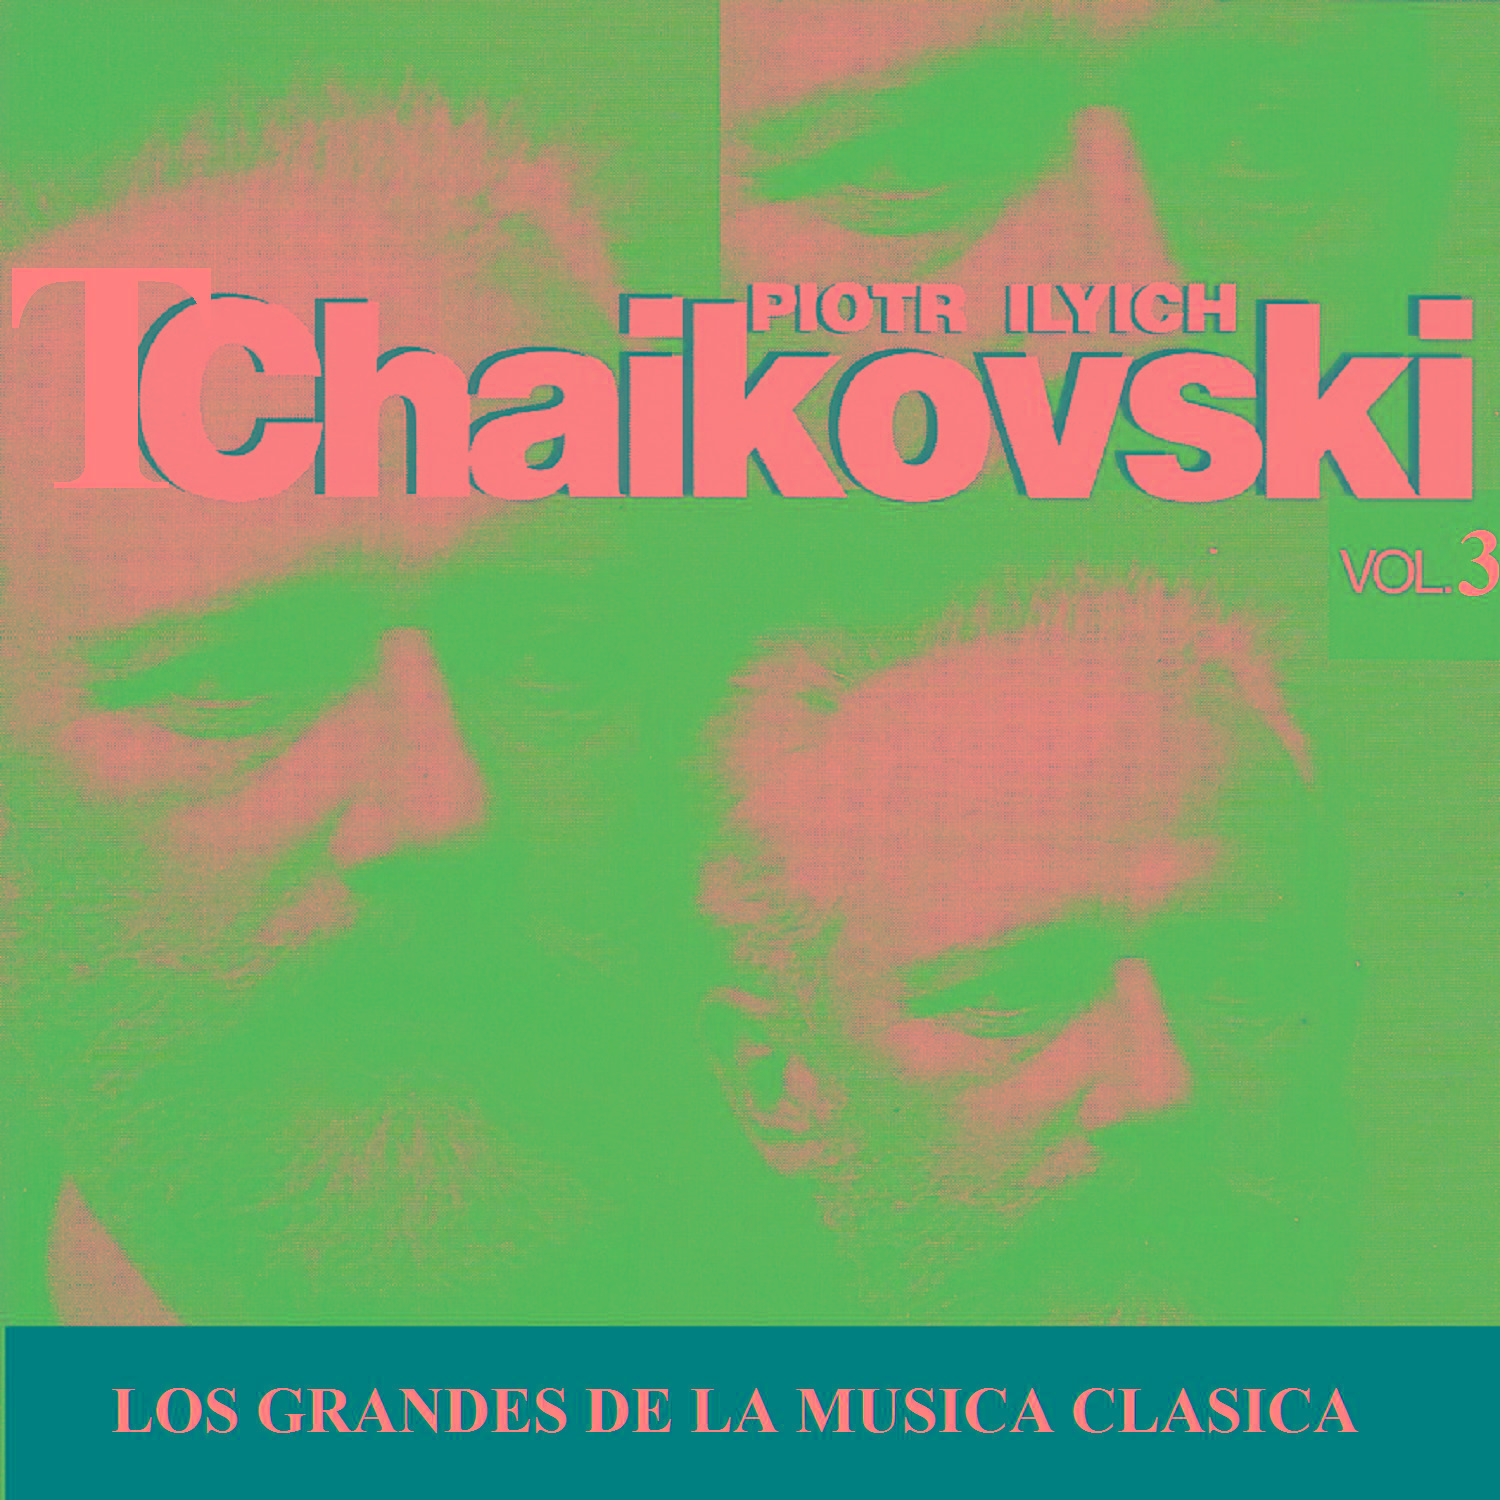 Los Grandes de la Musica Clasica - Piotr Ilyich Tchaikovsky Vol. 3